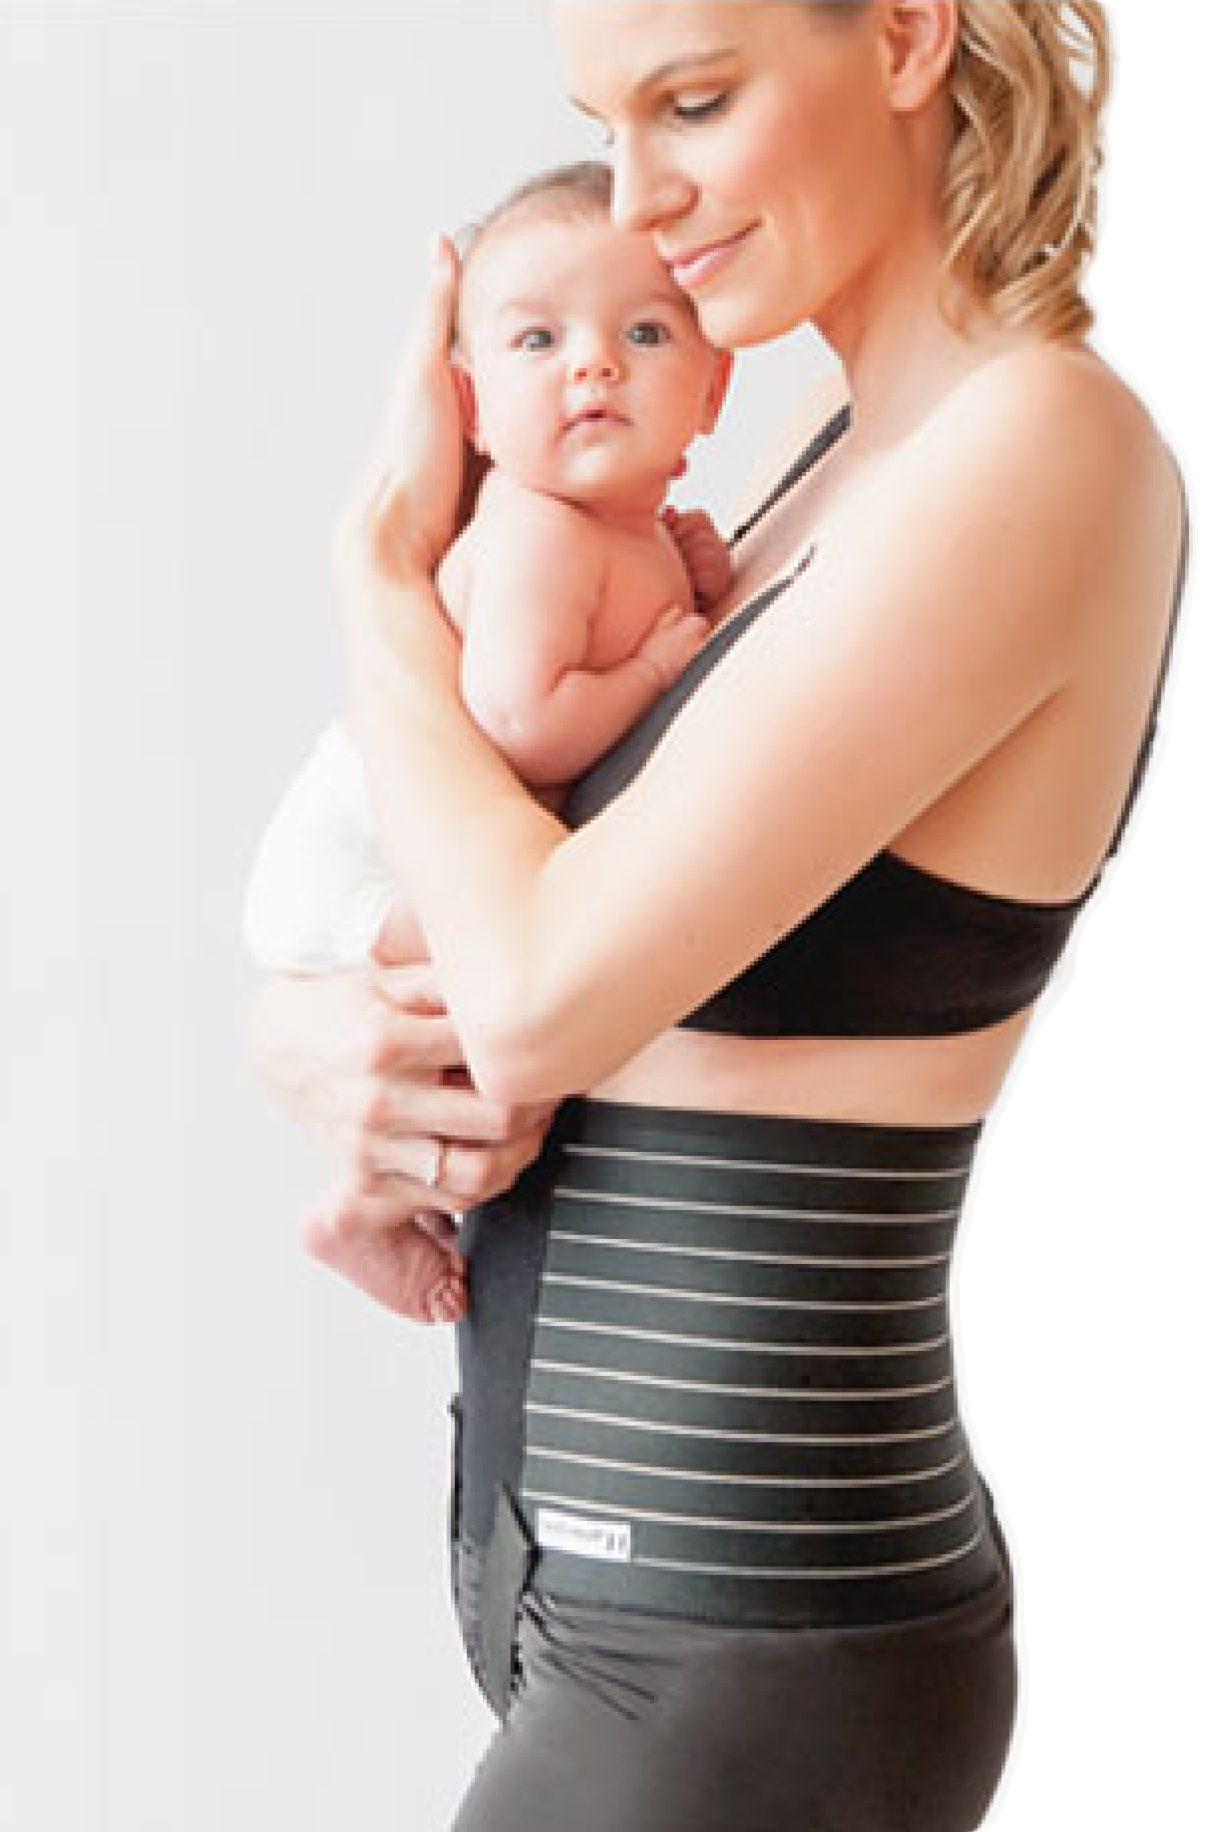 Mama Strut Postpartum Care The New Standard of Postpartum Care!